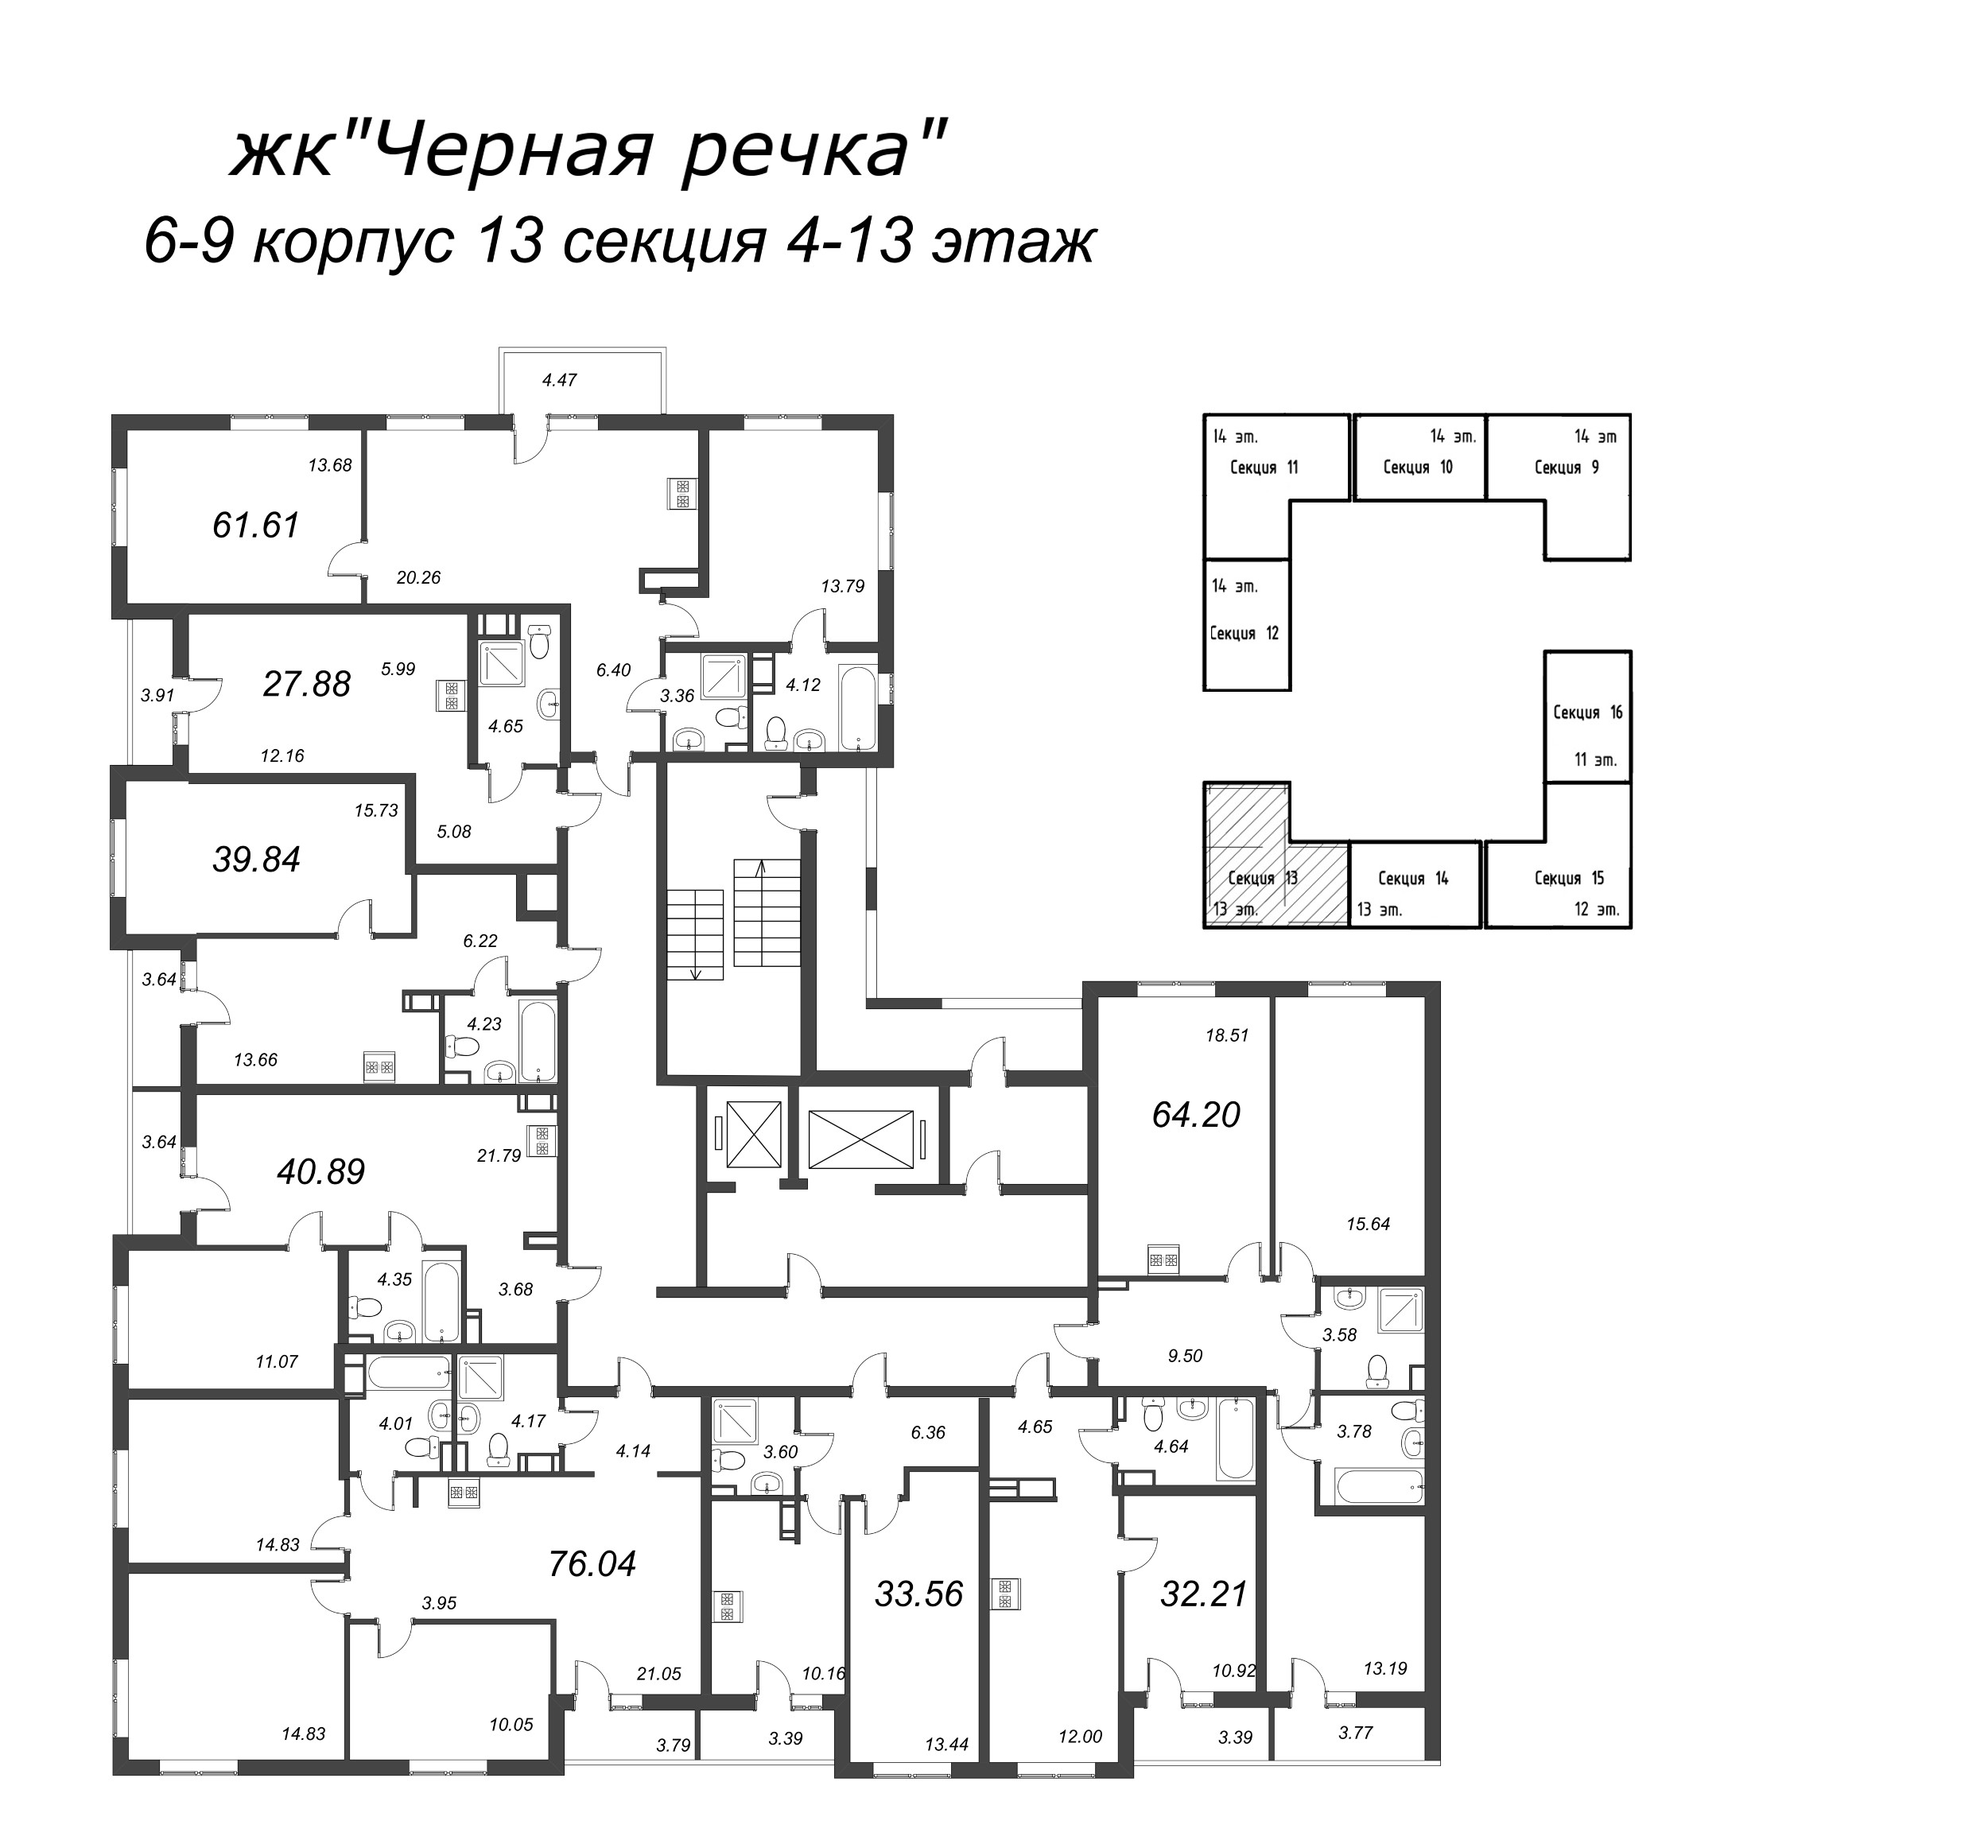 2-комнатная (Евро) квартира, 36.96 м² - планировка этажа